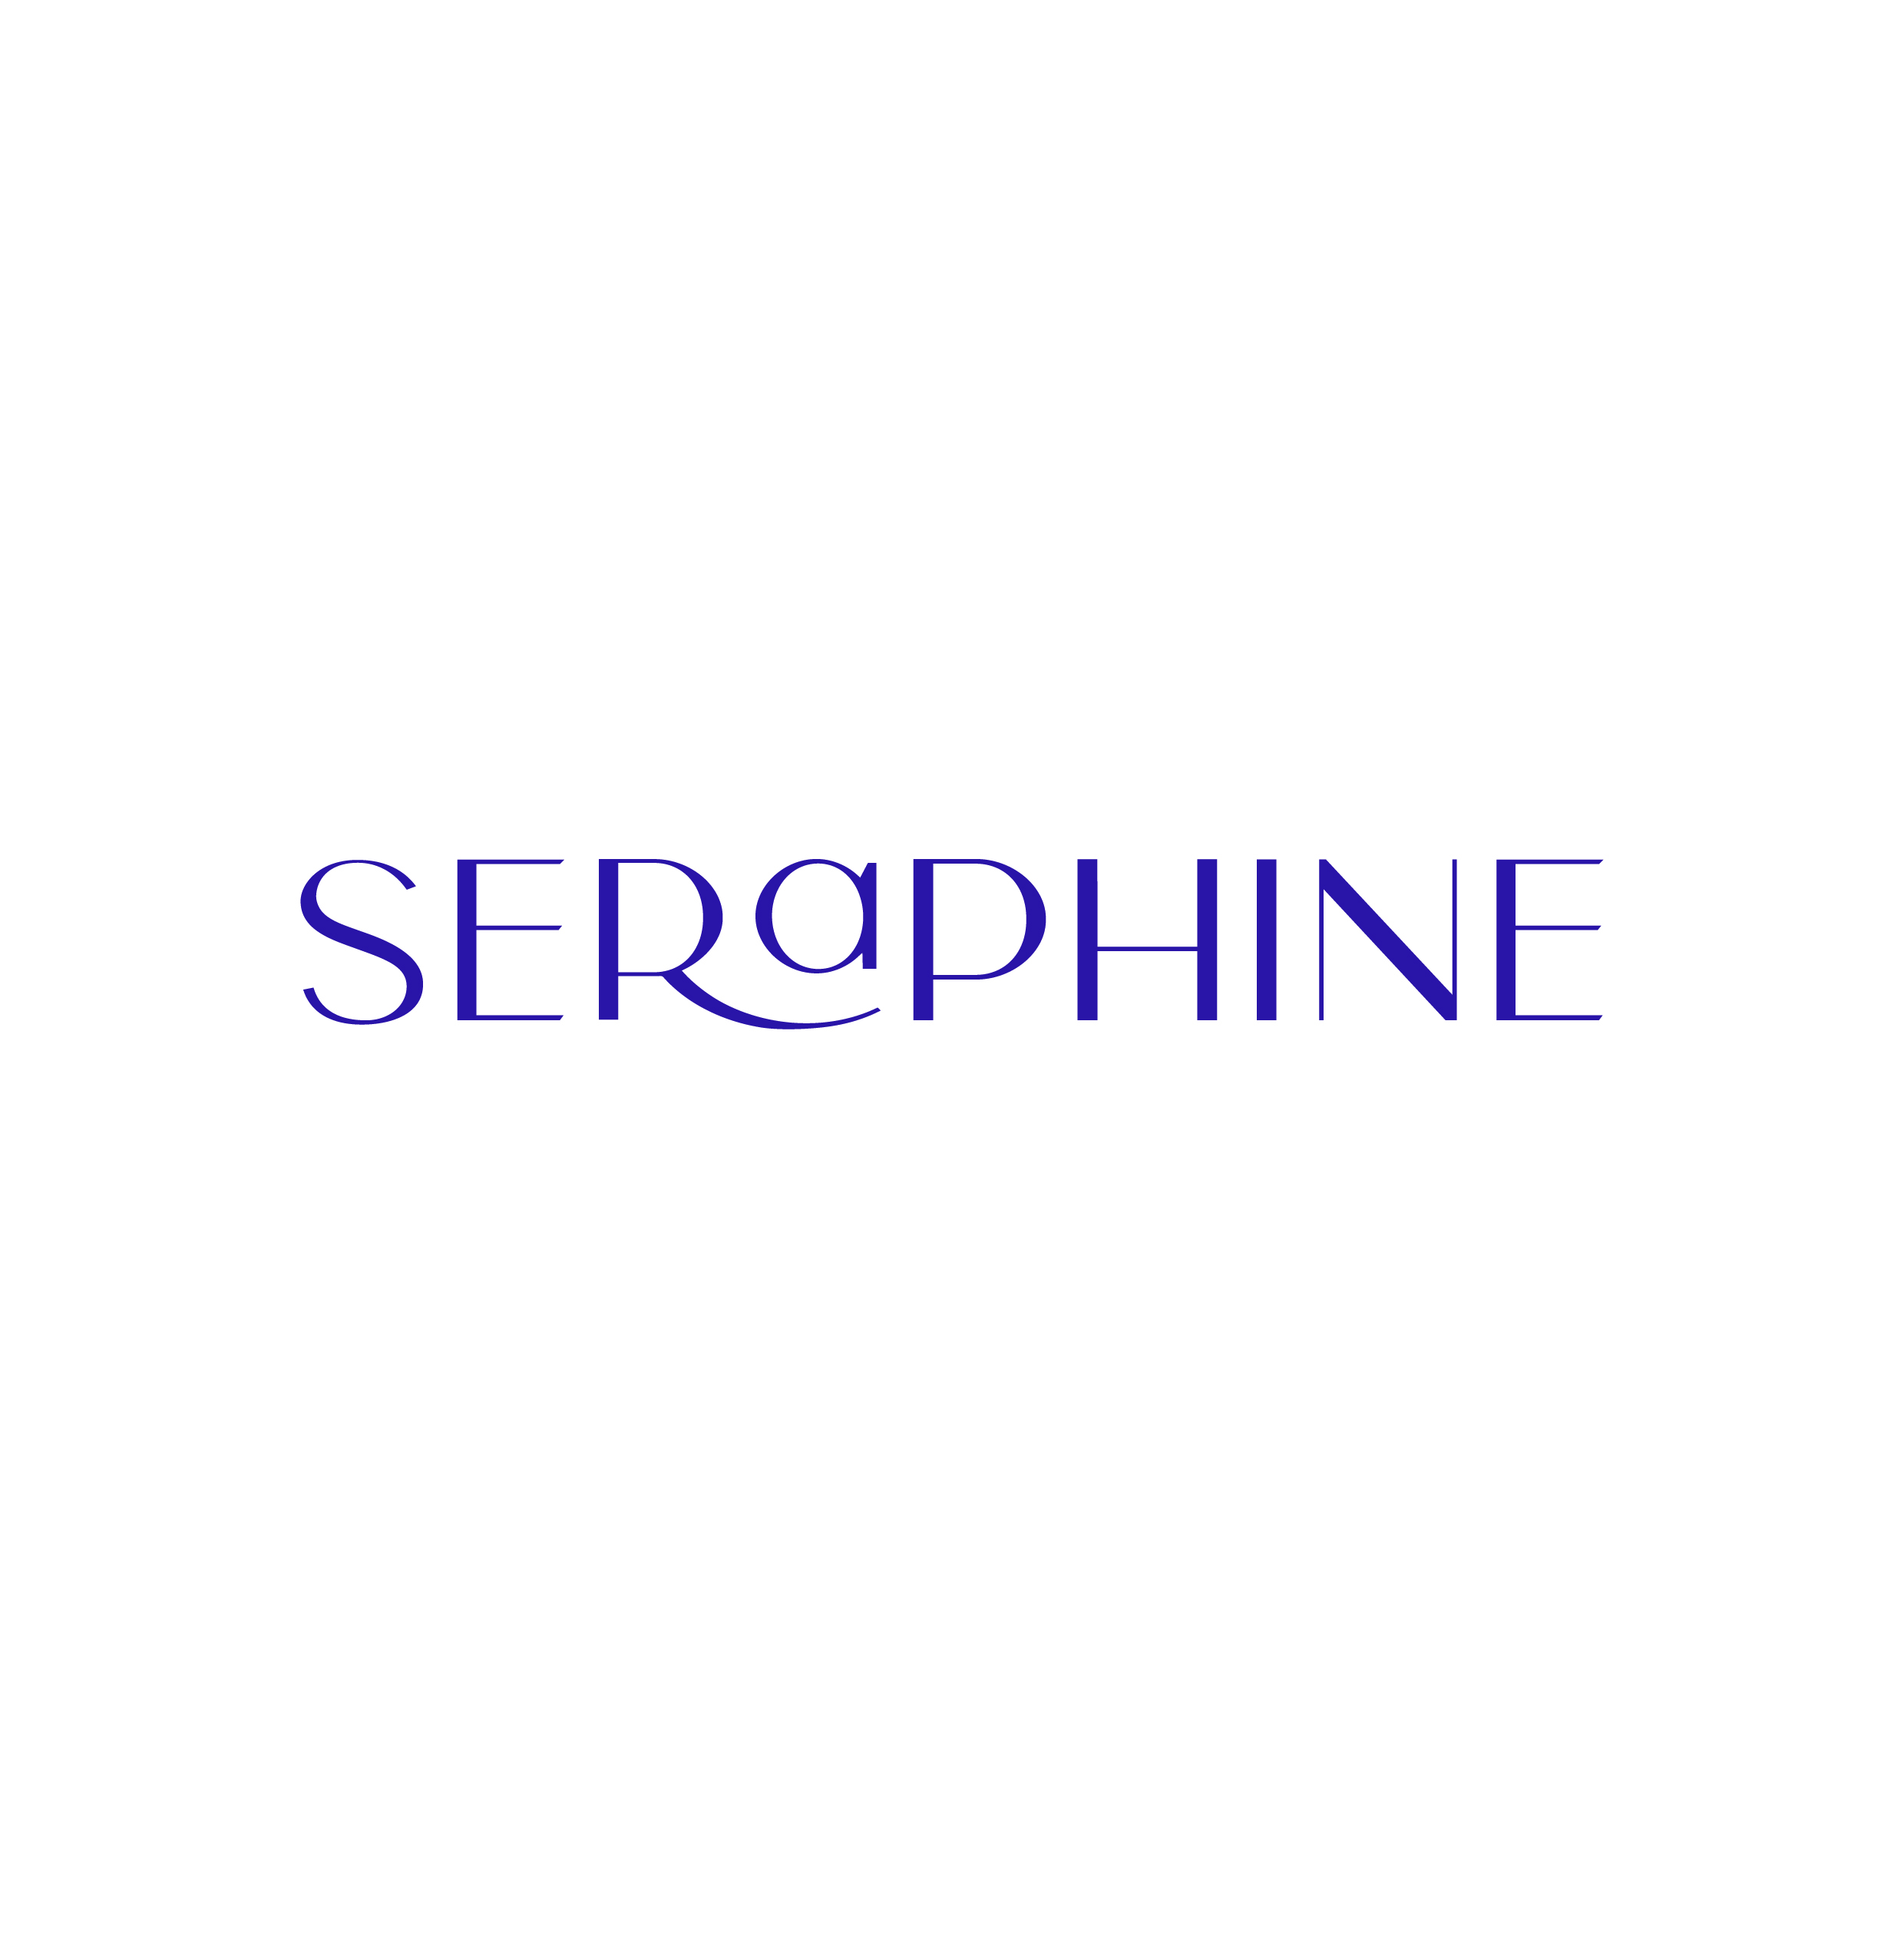 Seraphine Limited